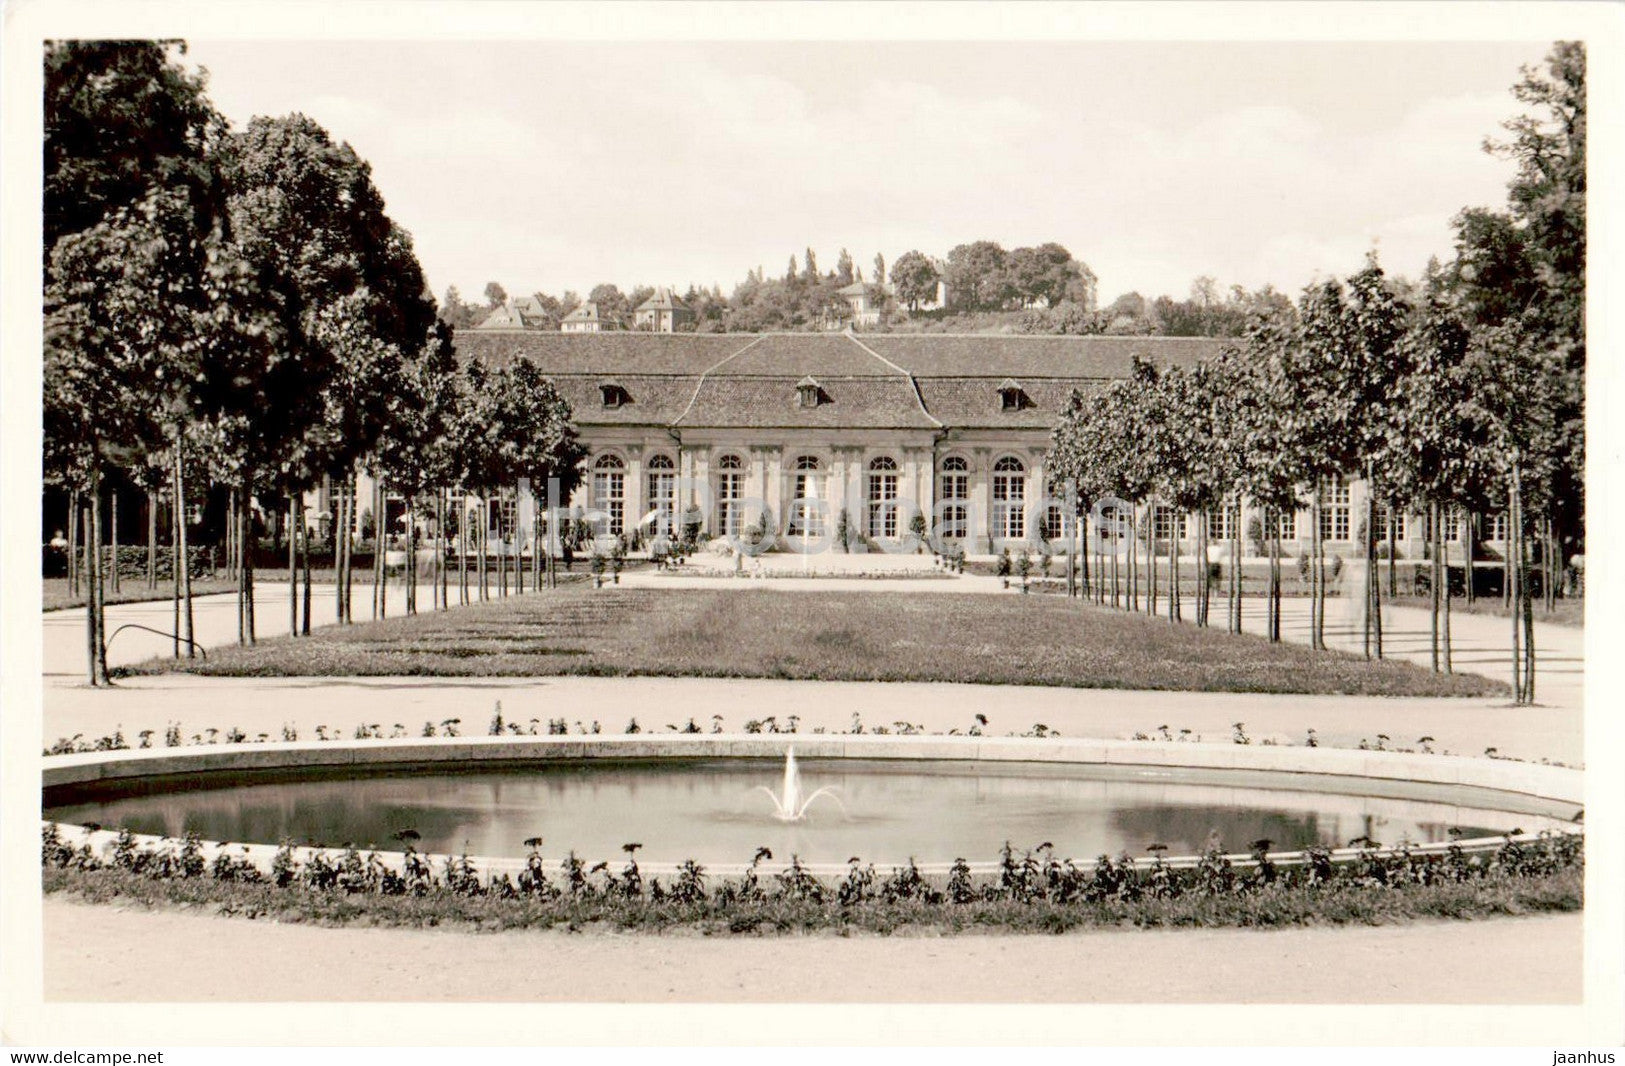 Ansbach - Hofgarten - Orangerie - old postcard - Germany - unused - JH Postcards